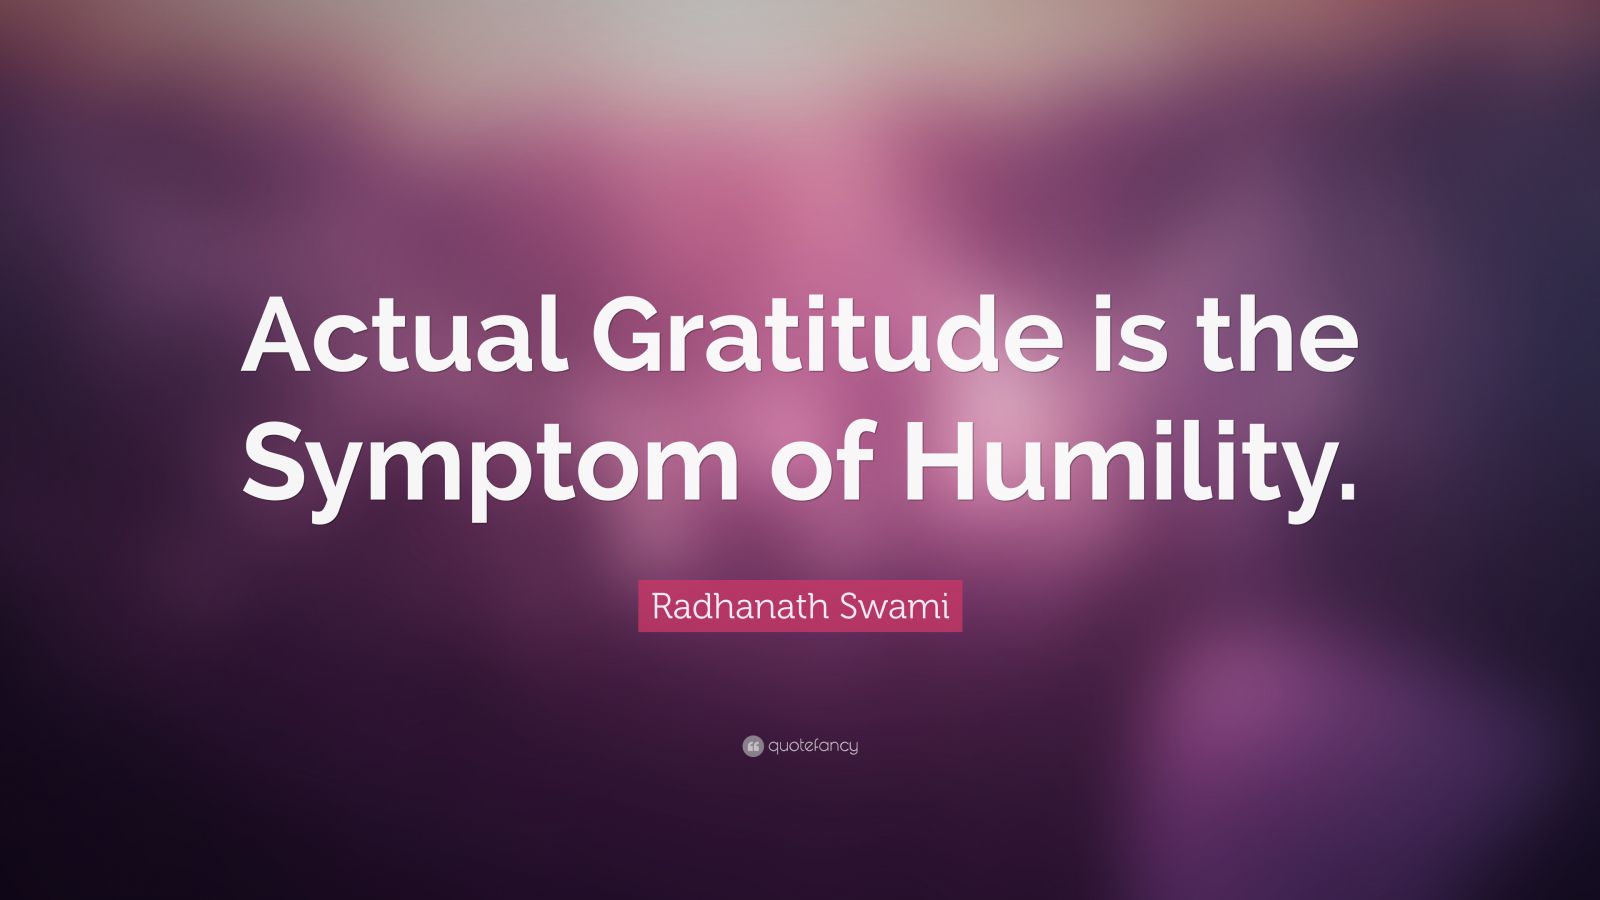 Radhanath Swami Quote: “Actual Gratitude is the Symptom of Humility